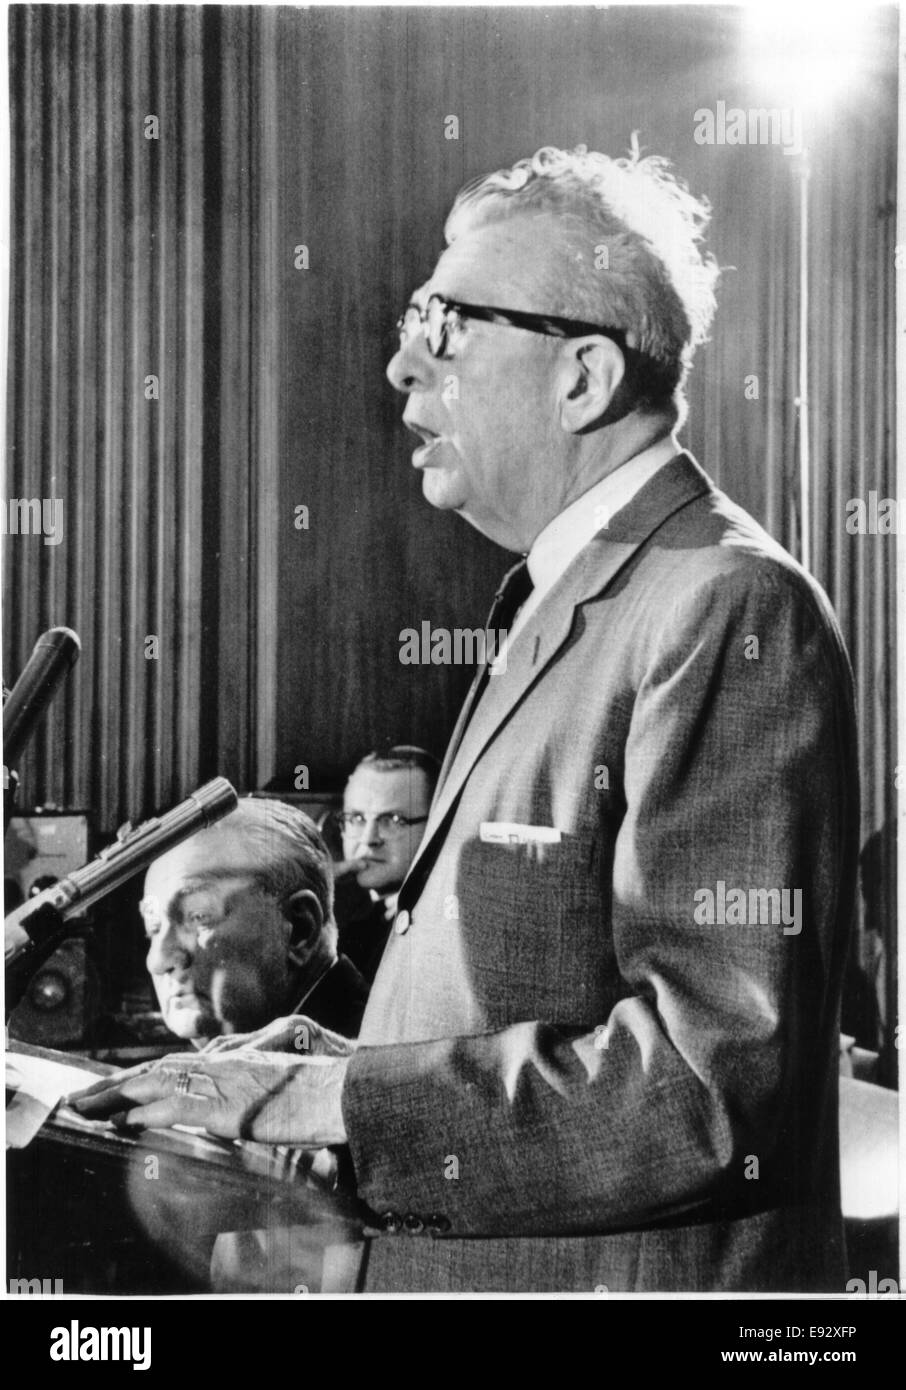 U.S. Senate GOP Leader, Everett Dirksen, Addressing Press Conference, Portrait, 1964 Stock Photo